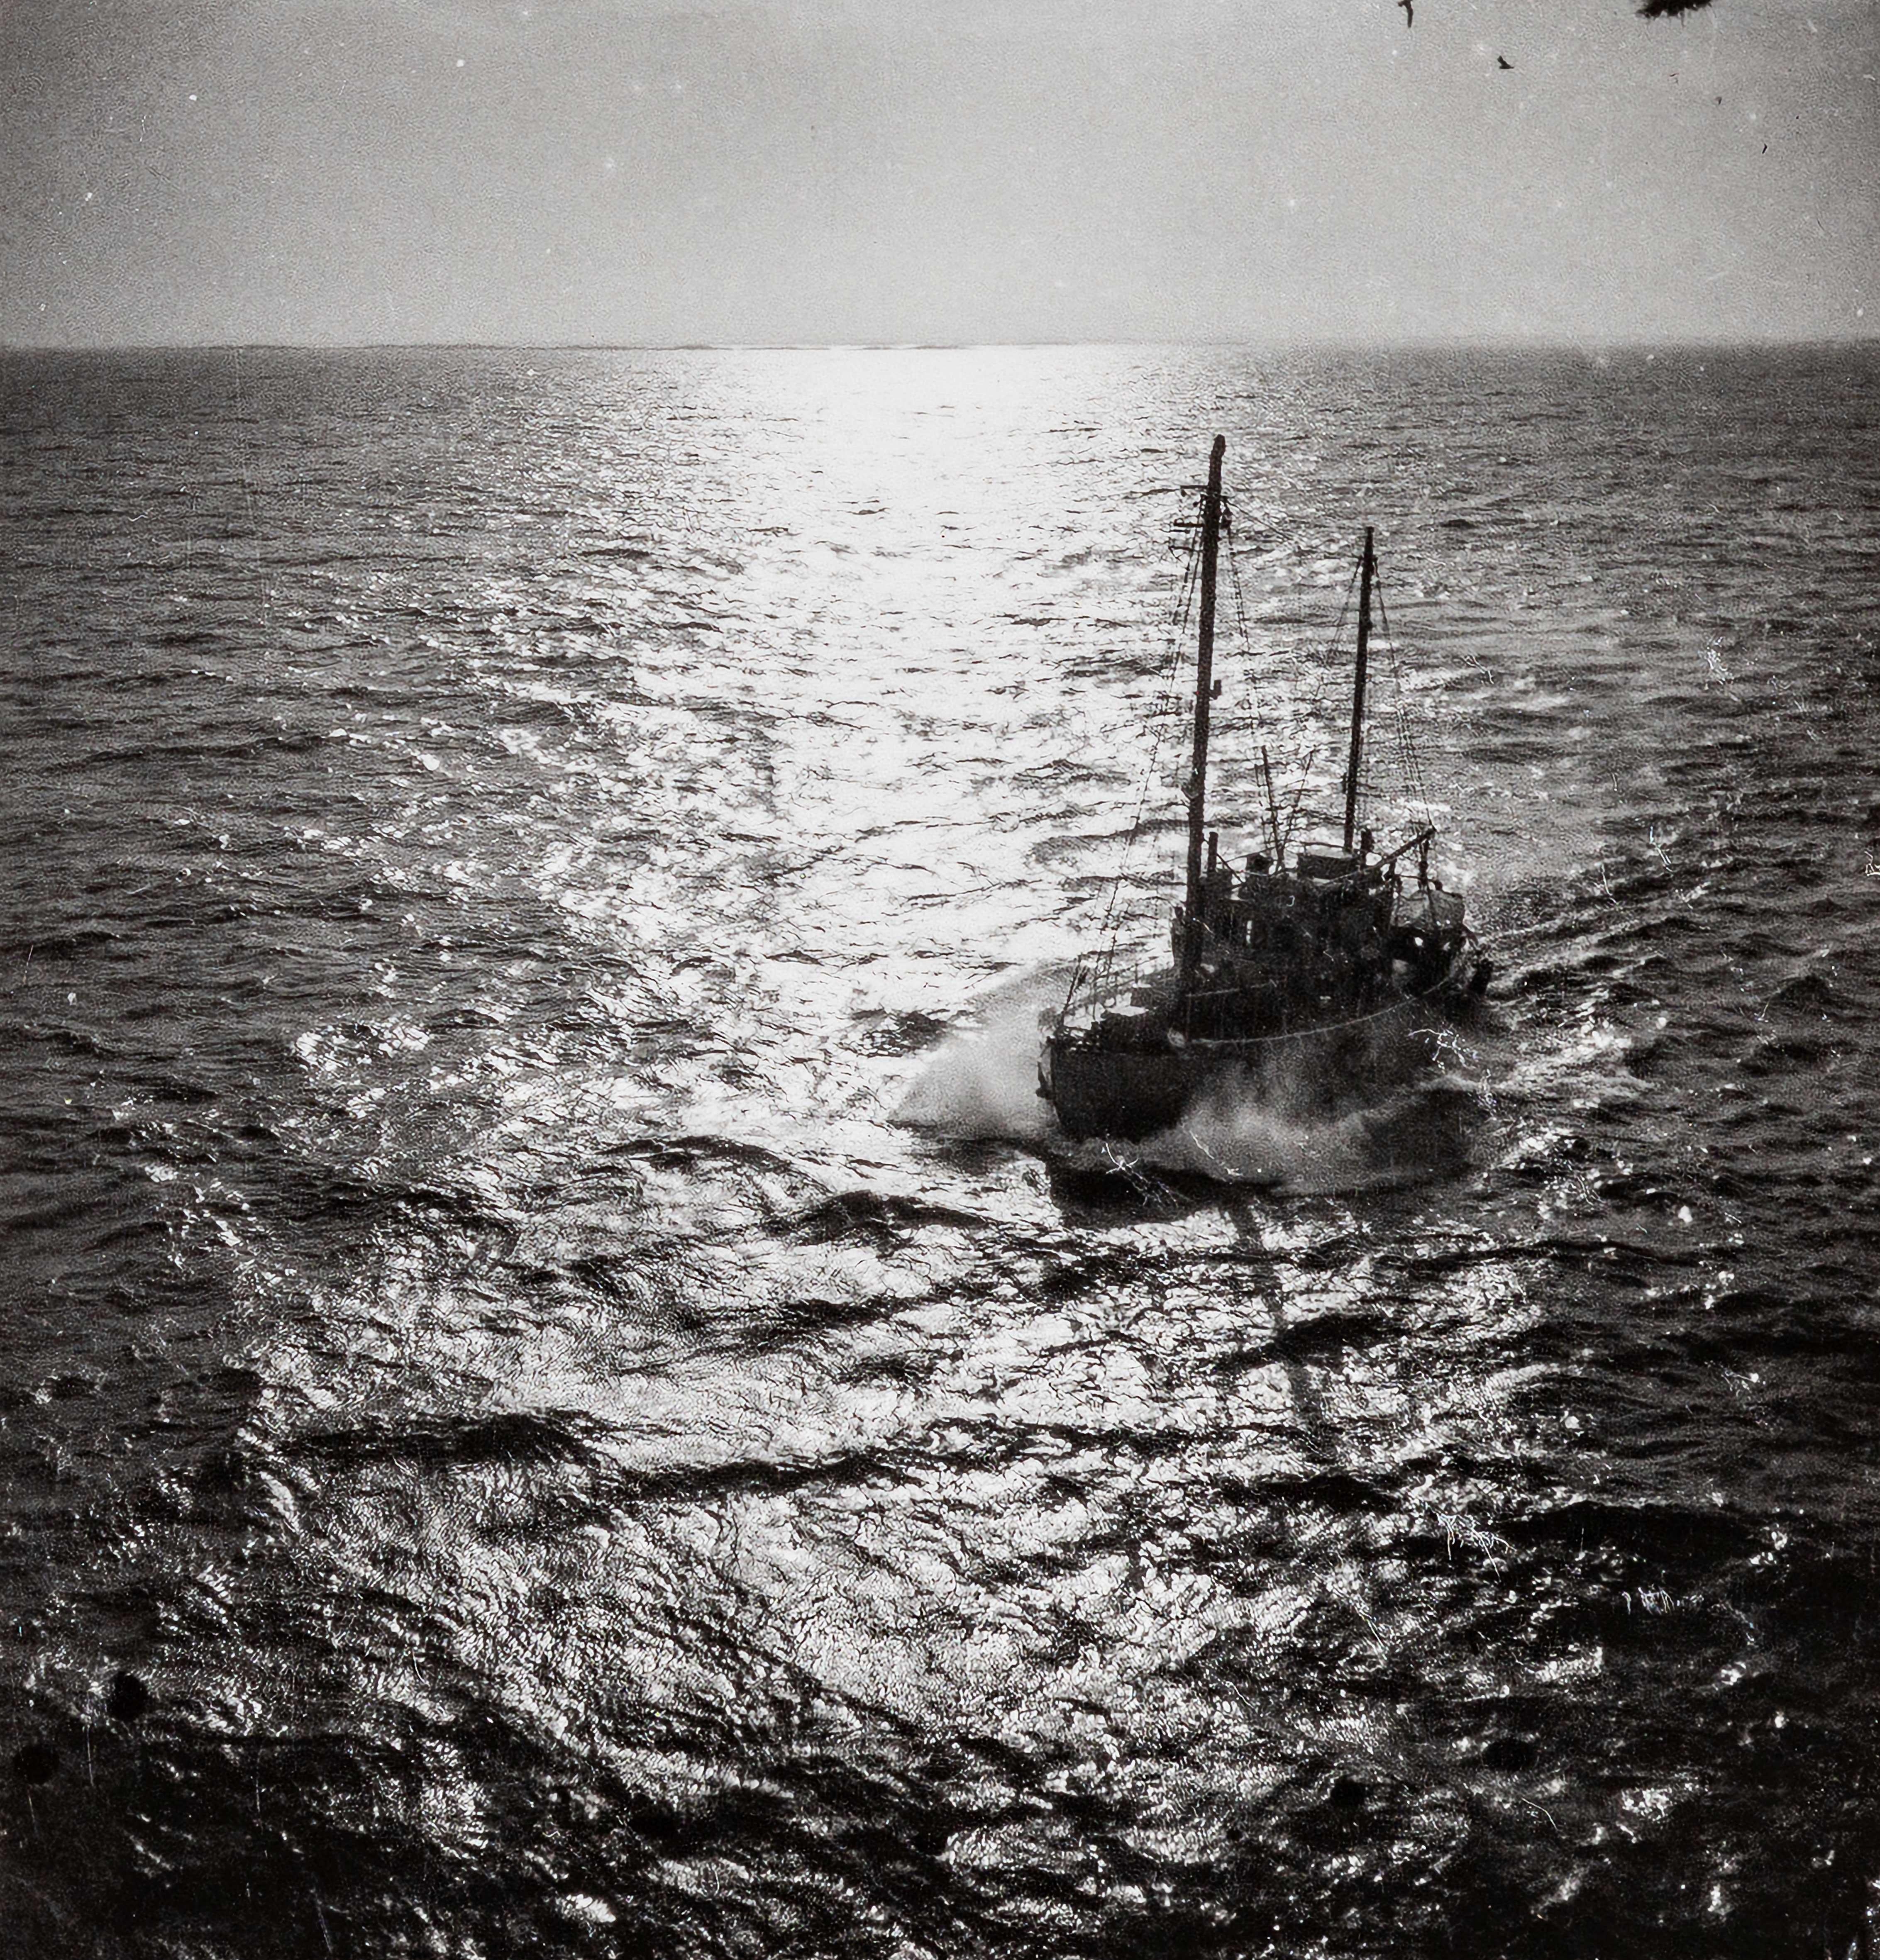 Dora Maar Black and White Photograph - Sea [Reflections], (Marines [Reflets]) I